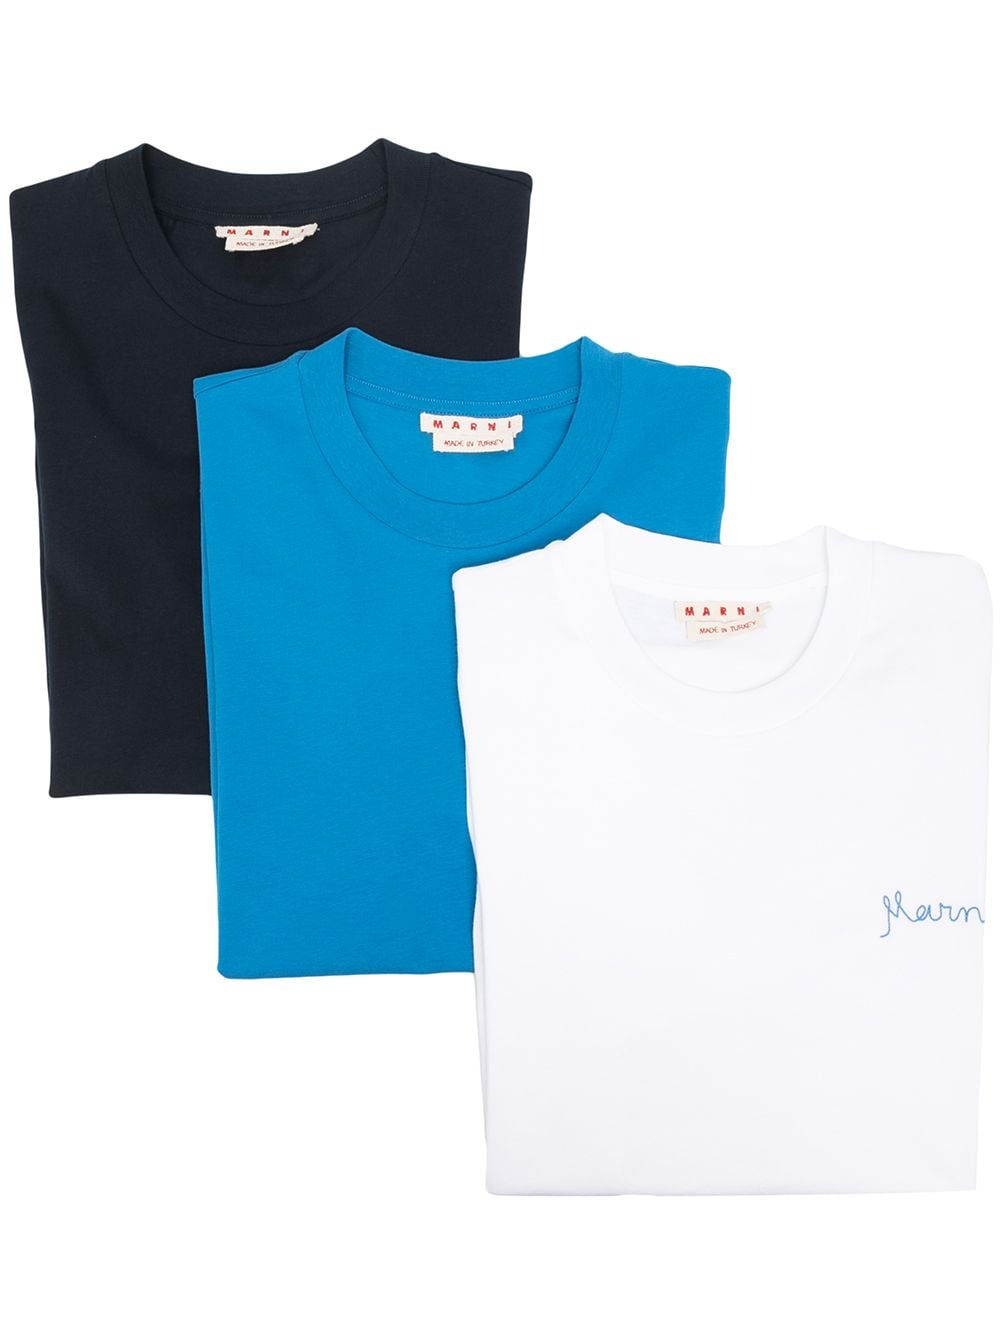 фото Marni набор из трех футболок с вышитым логотипом